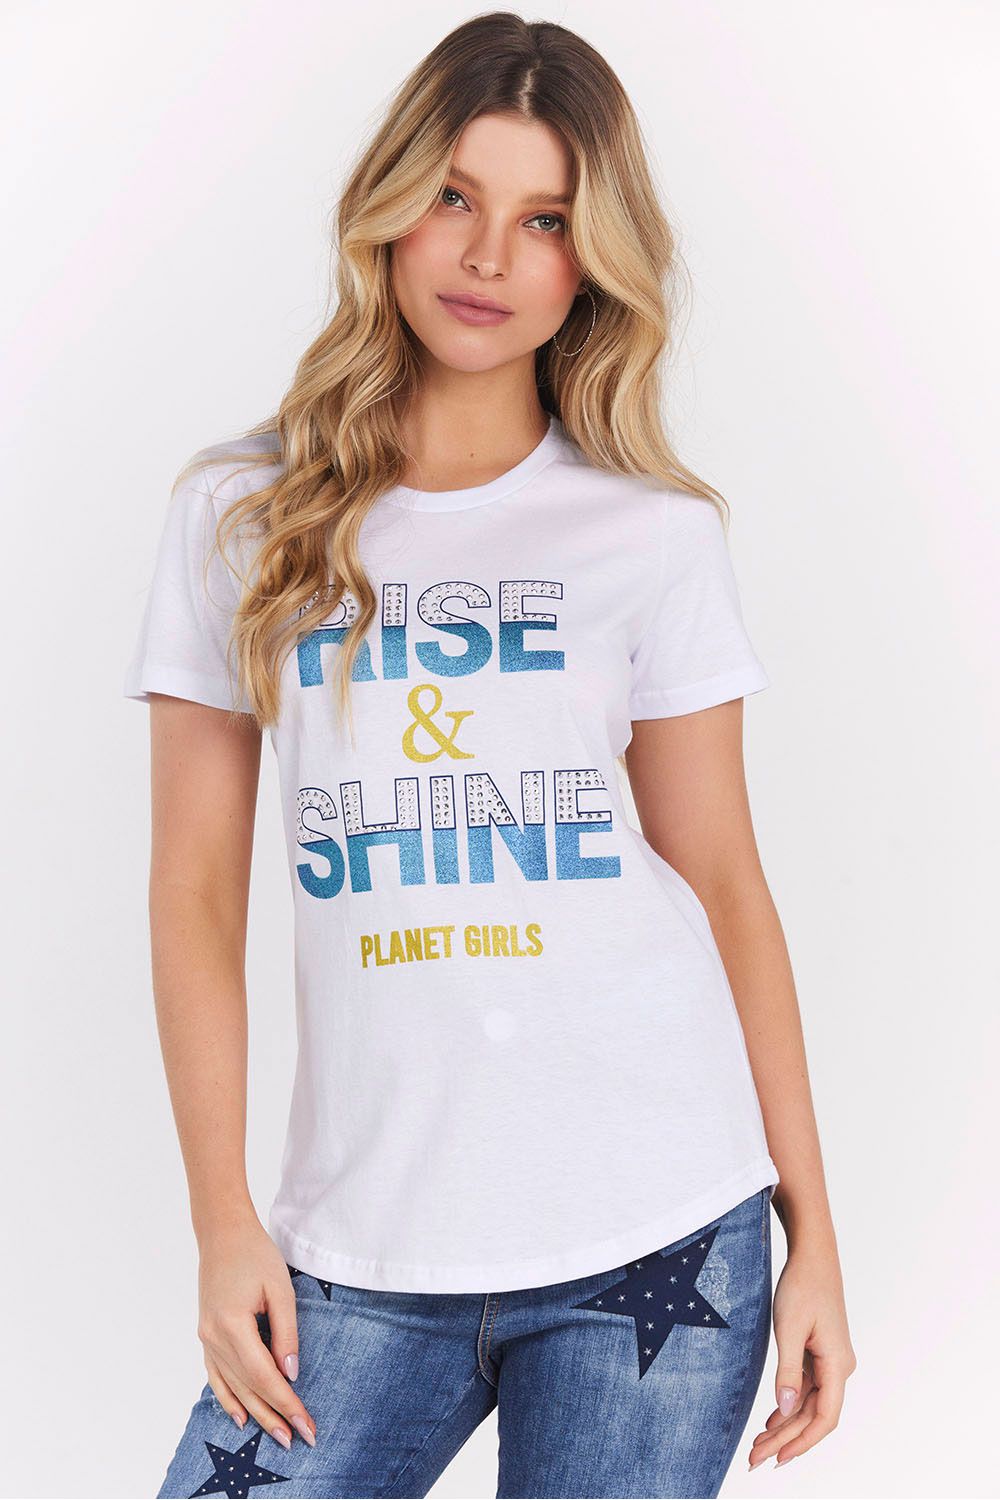 Camiseta Feminina Malha Básica Dreams Planet Girls - Planet Girls